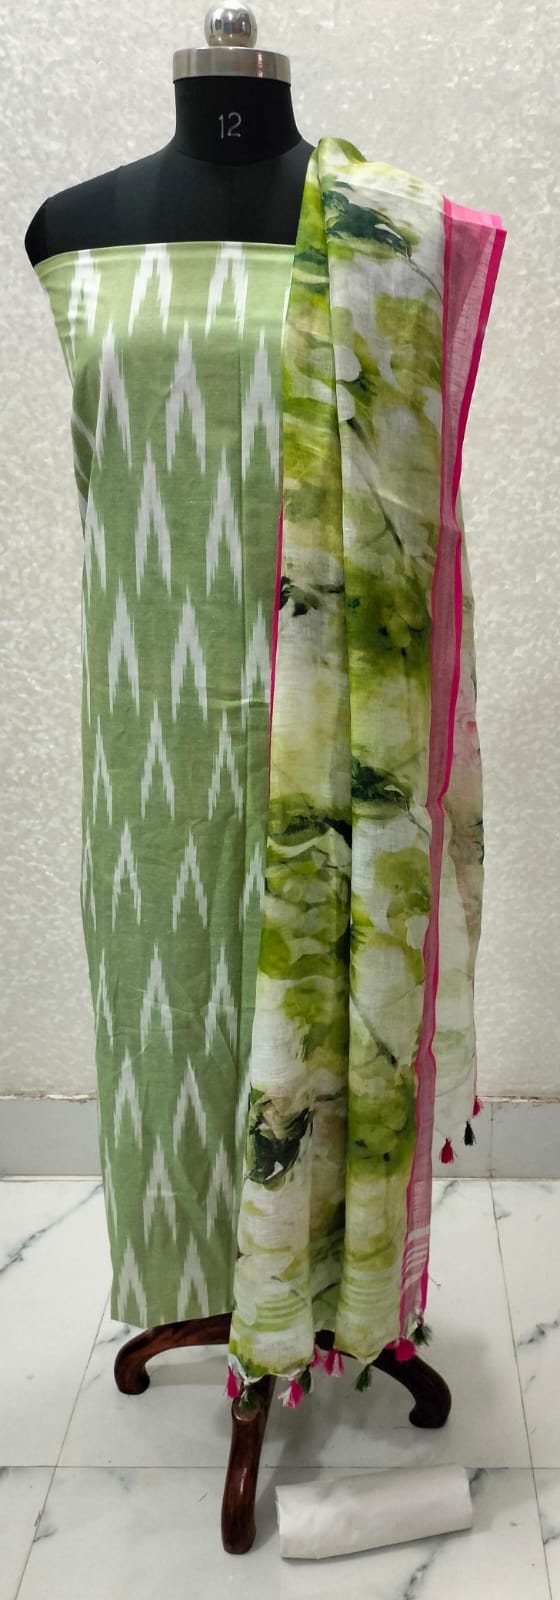 Green Handloom Ikkat Top and Printed Linen Dupatta 2Pc Unstitched Dress Material